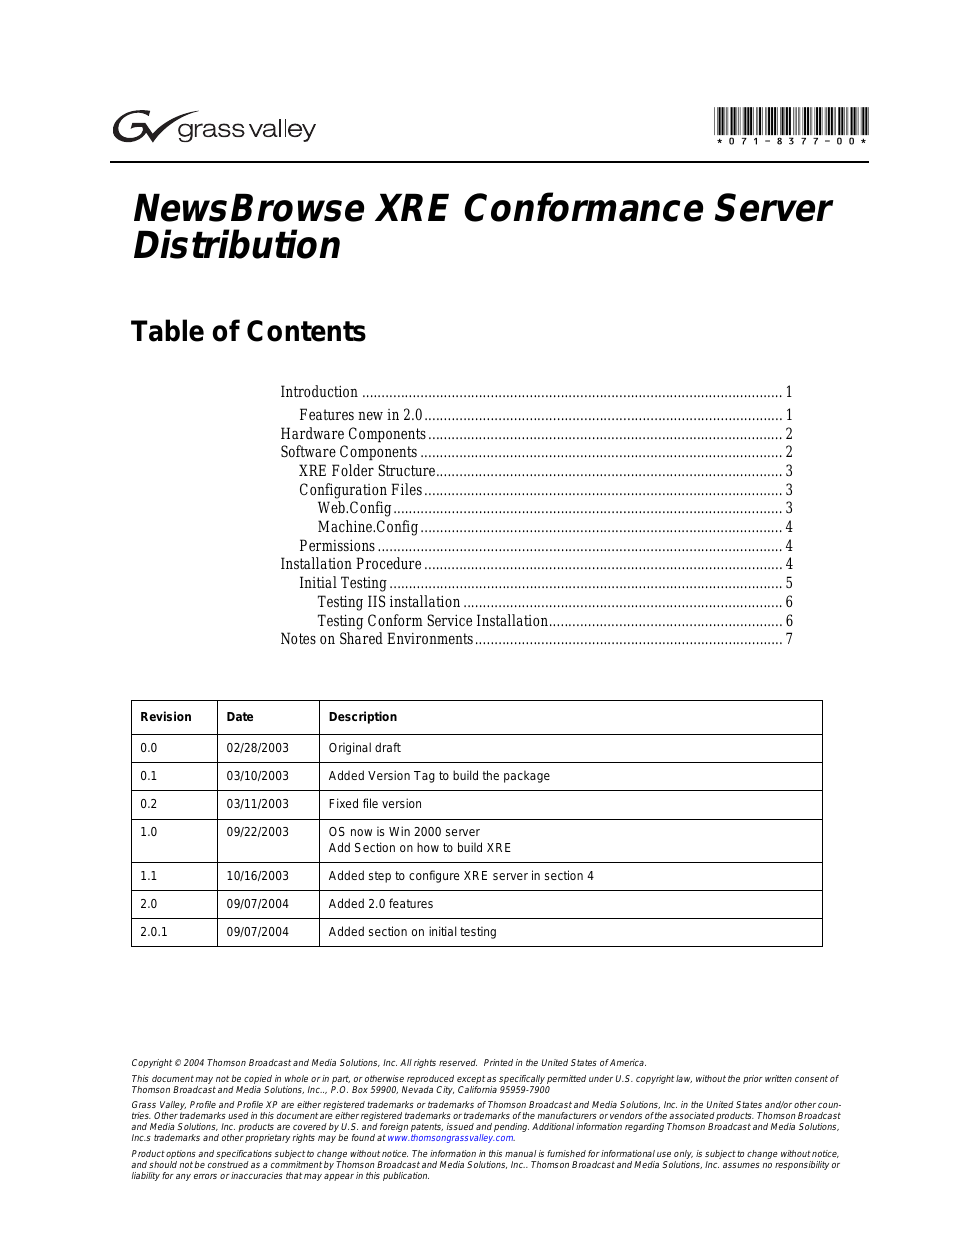 NewsBrowse XRE Conformance Server Distribution